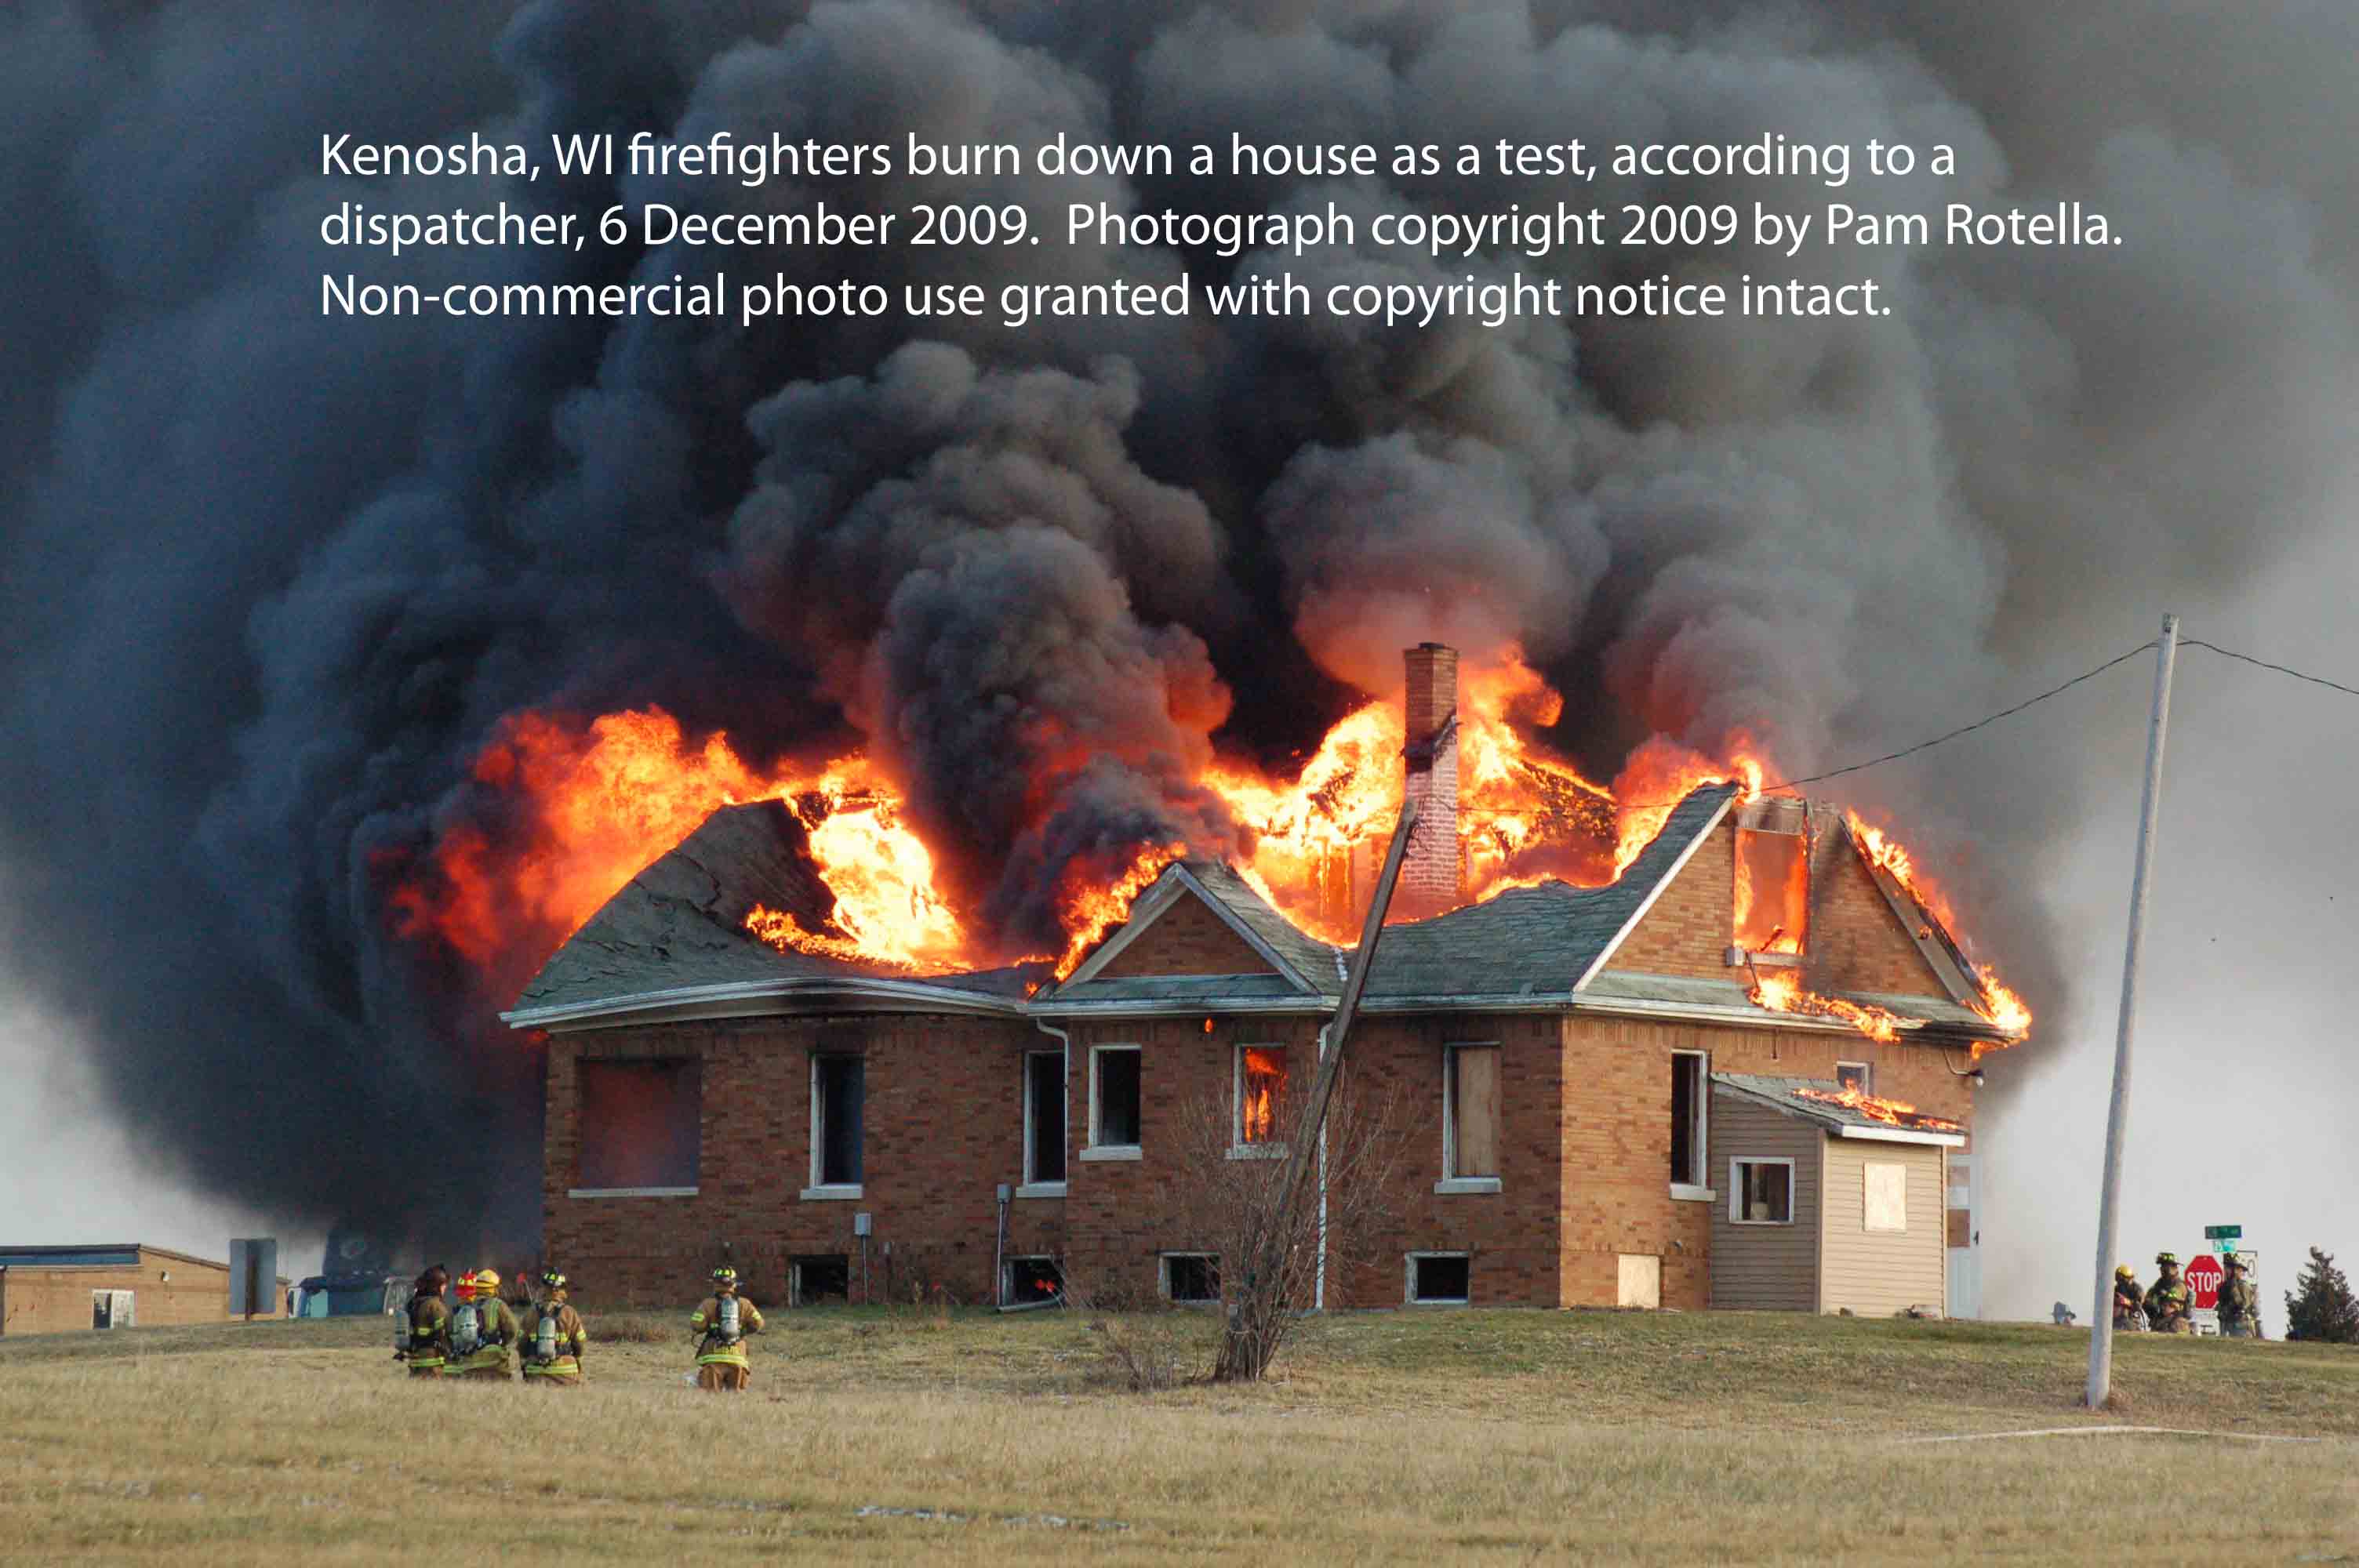 Kenosha firefighters burn down house as test, 6 Dec 2009